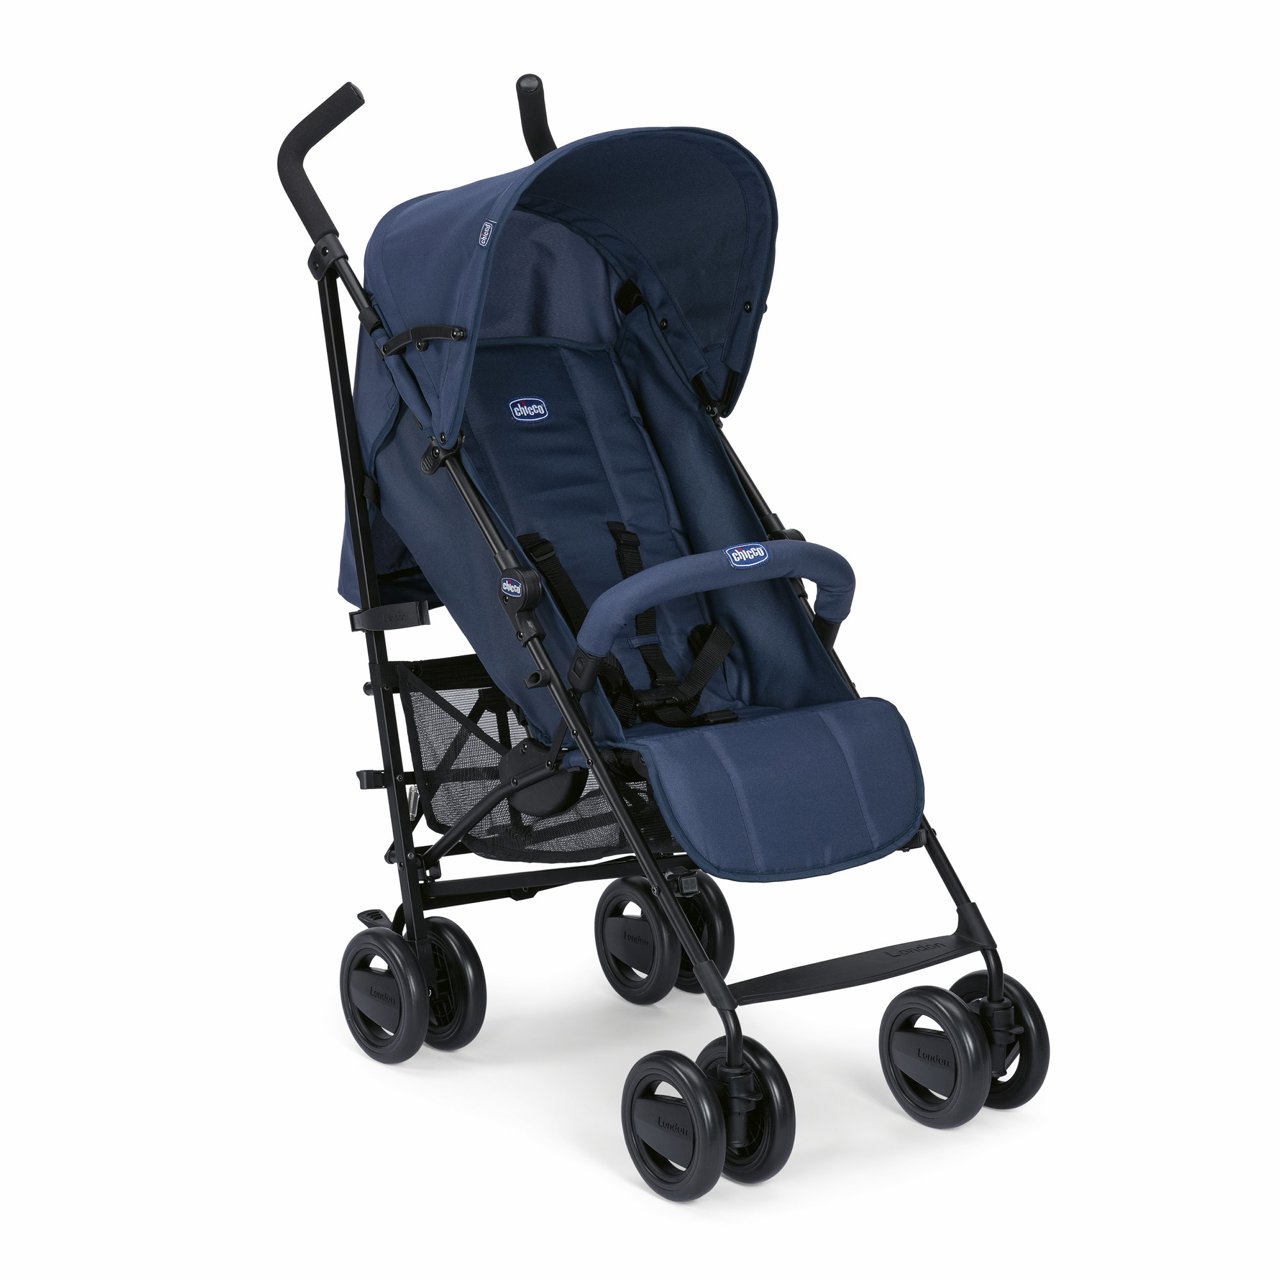 Comprar Reposapiés para carrito, reposapiés ajustable para cochecito de  bebé, estructura estable, asiento para niños